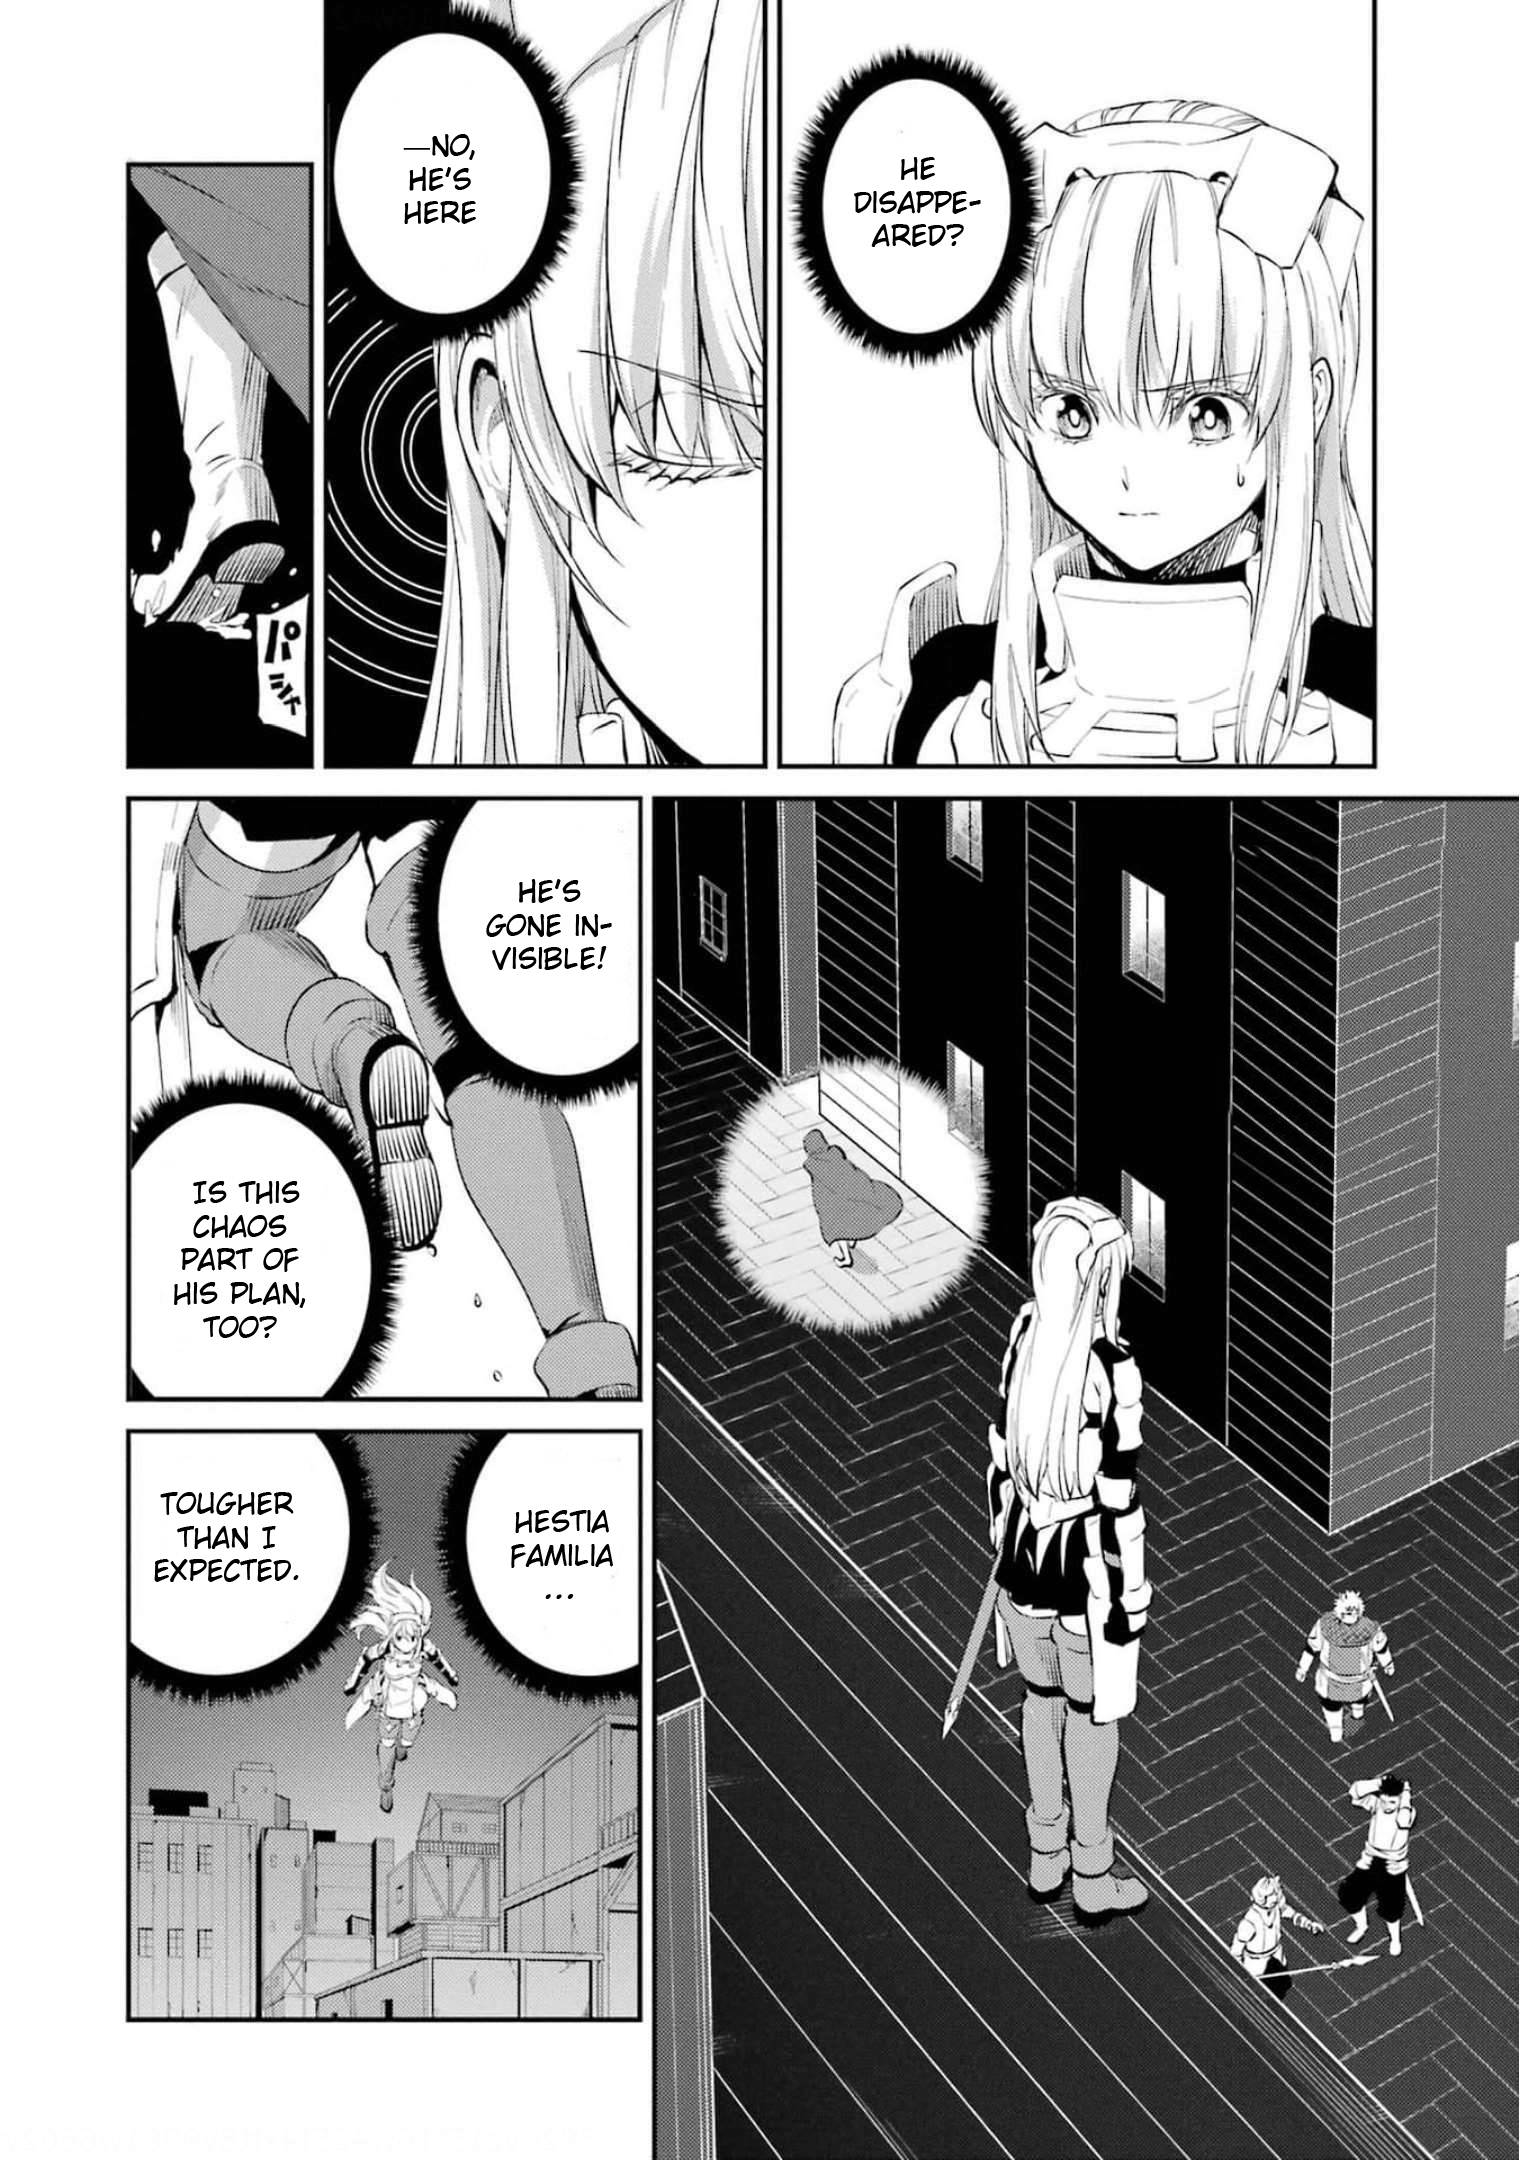 Danmachi Manga #85: Deleite